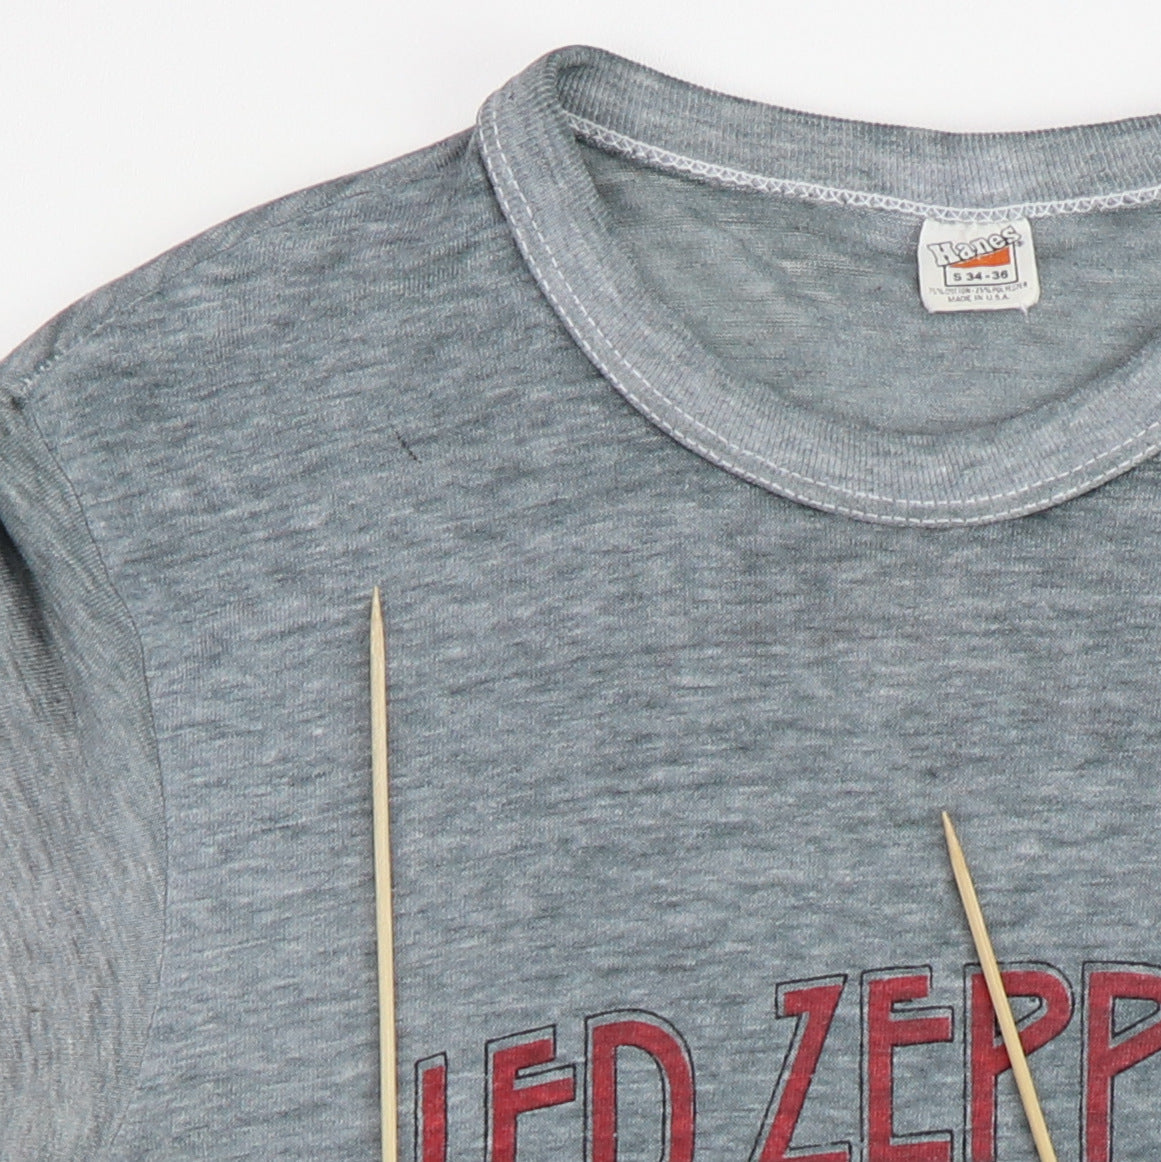 1980 Led Zeppelin Over Europe Final Tour Shirt